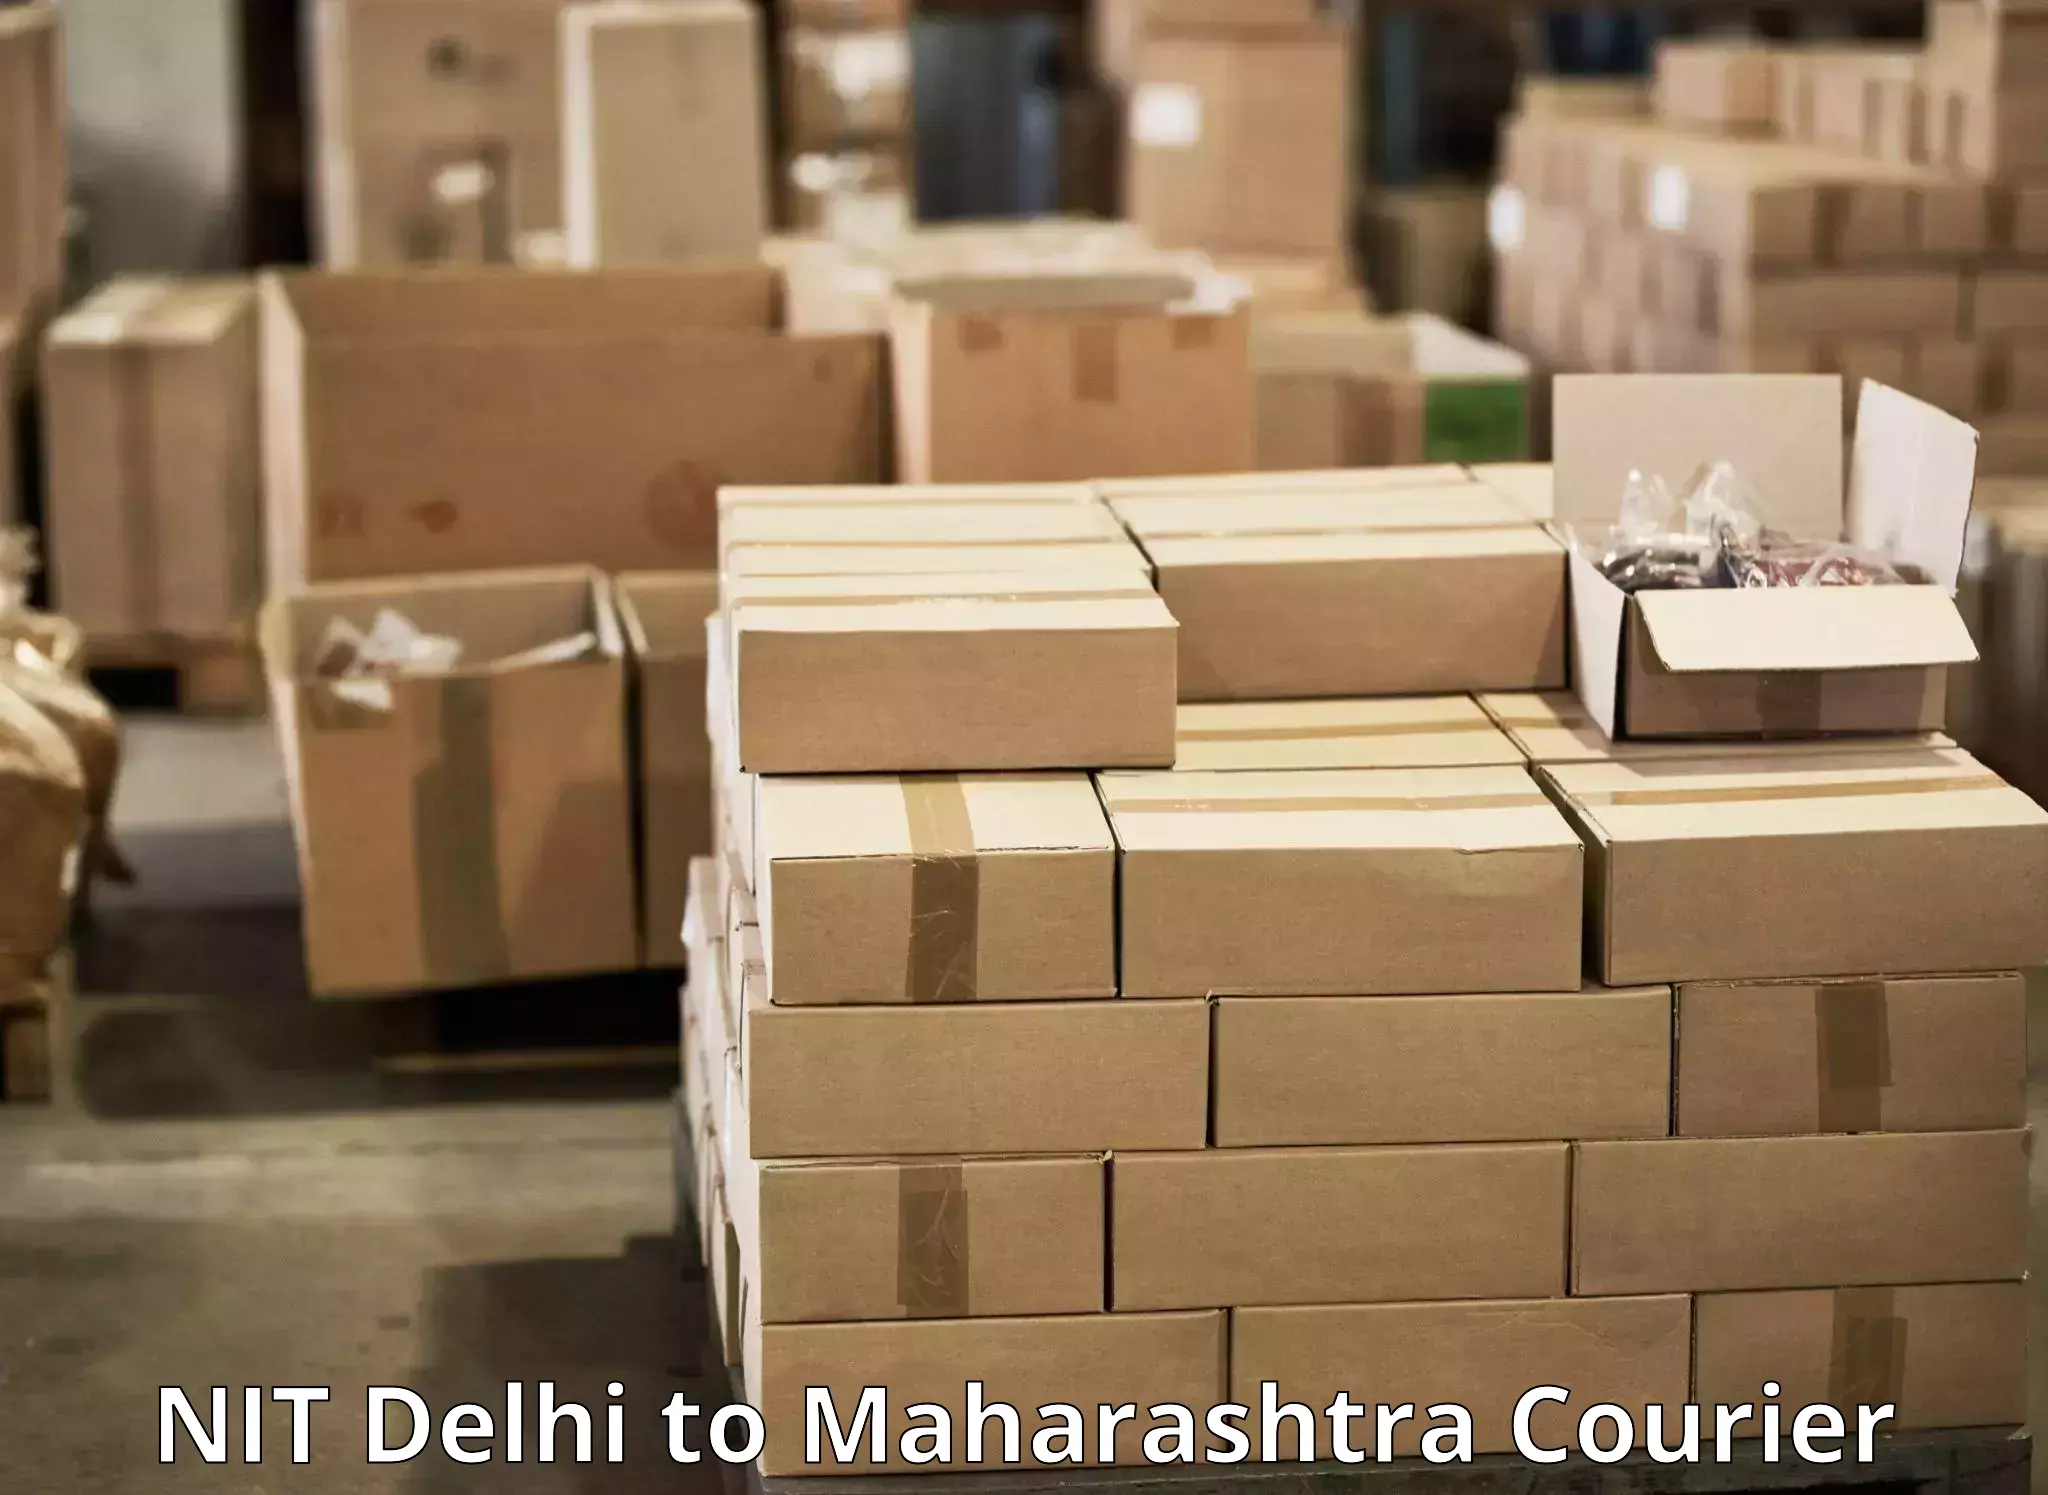 User-friendly delivery service NIT Delhi to Alephata